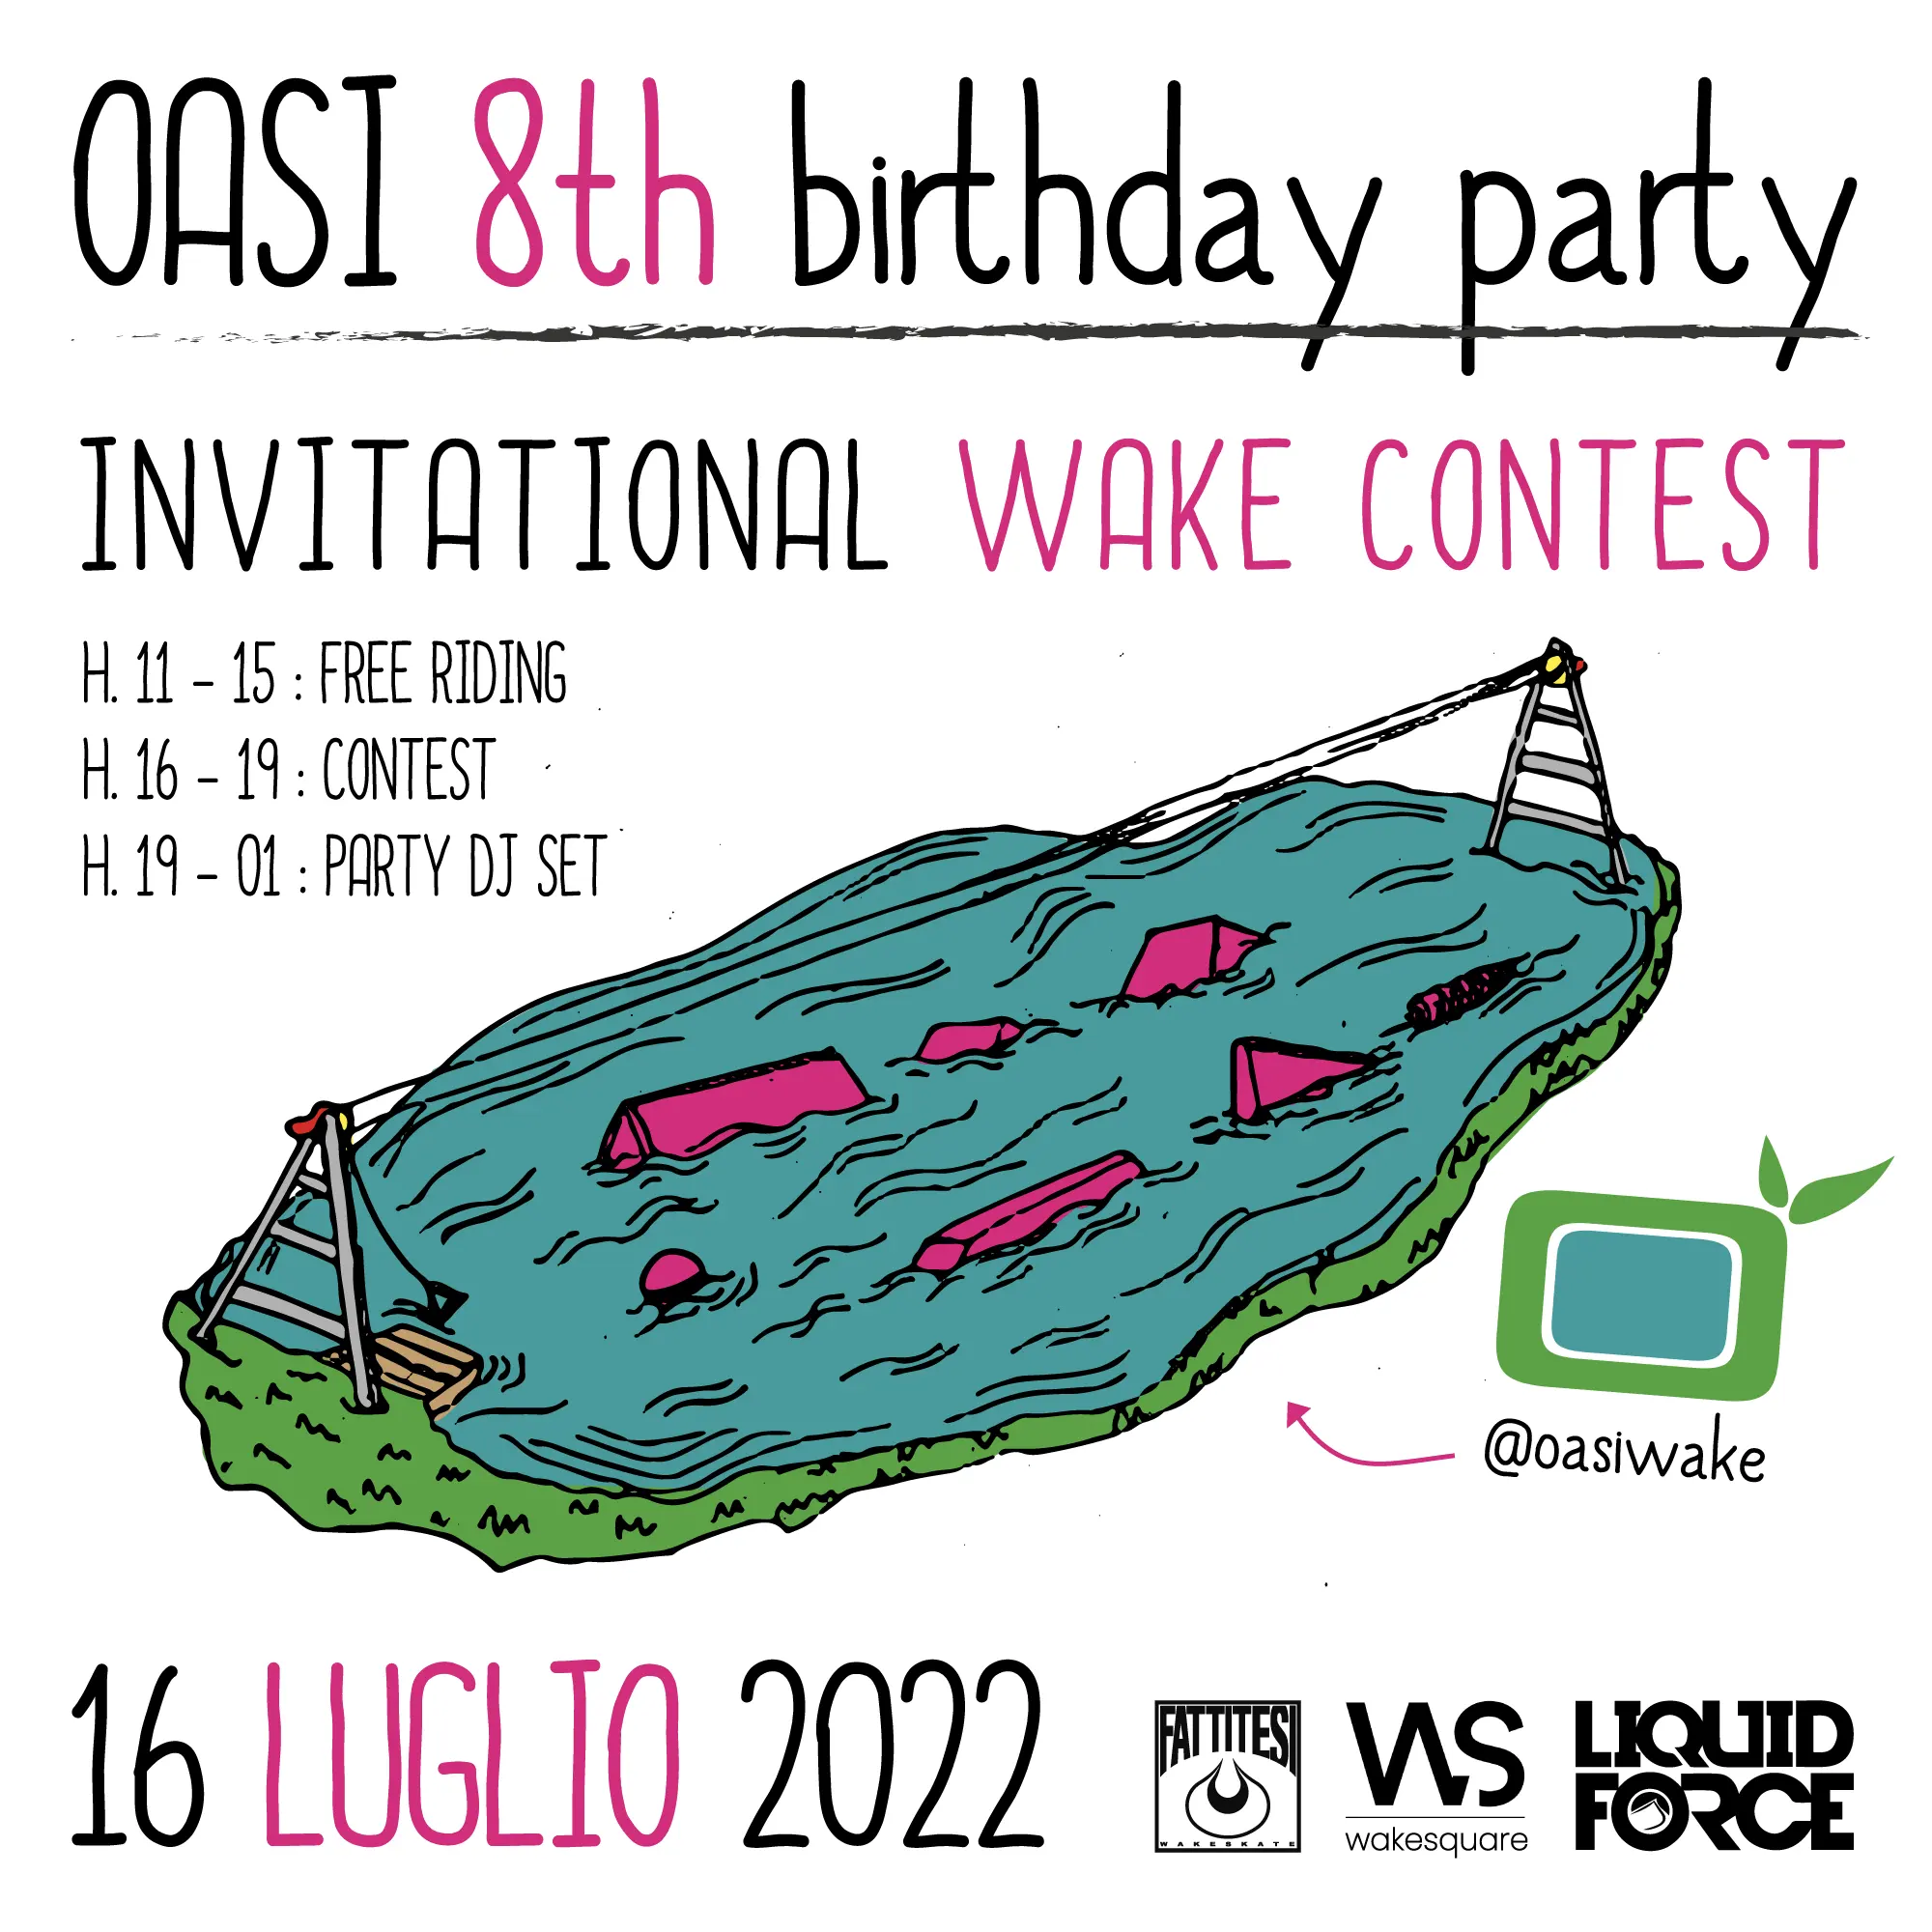 Oasi Wakepark 8th Birthday Party, 16 Luglio 2022 locandina wake invitational 2022 oasiwake 3